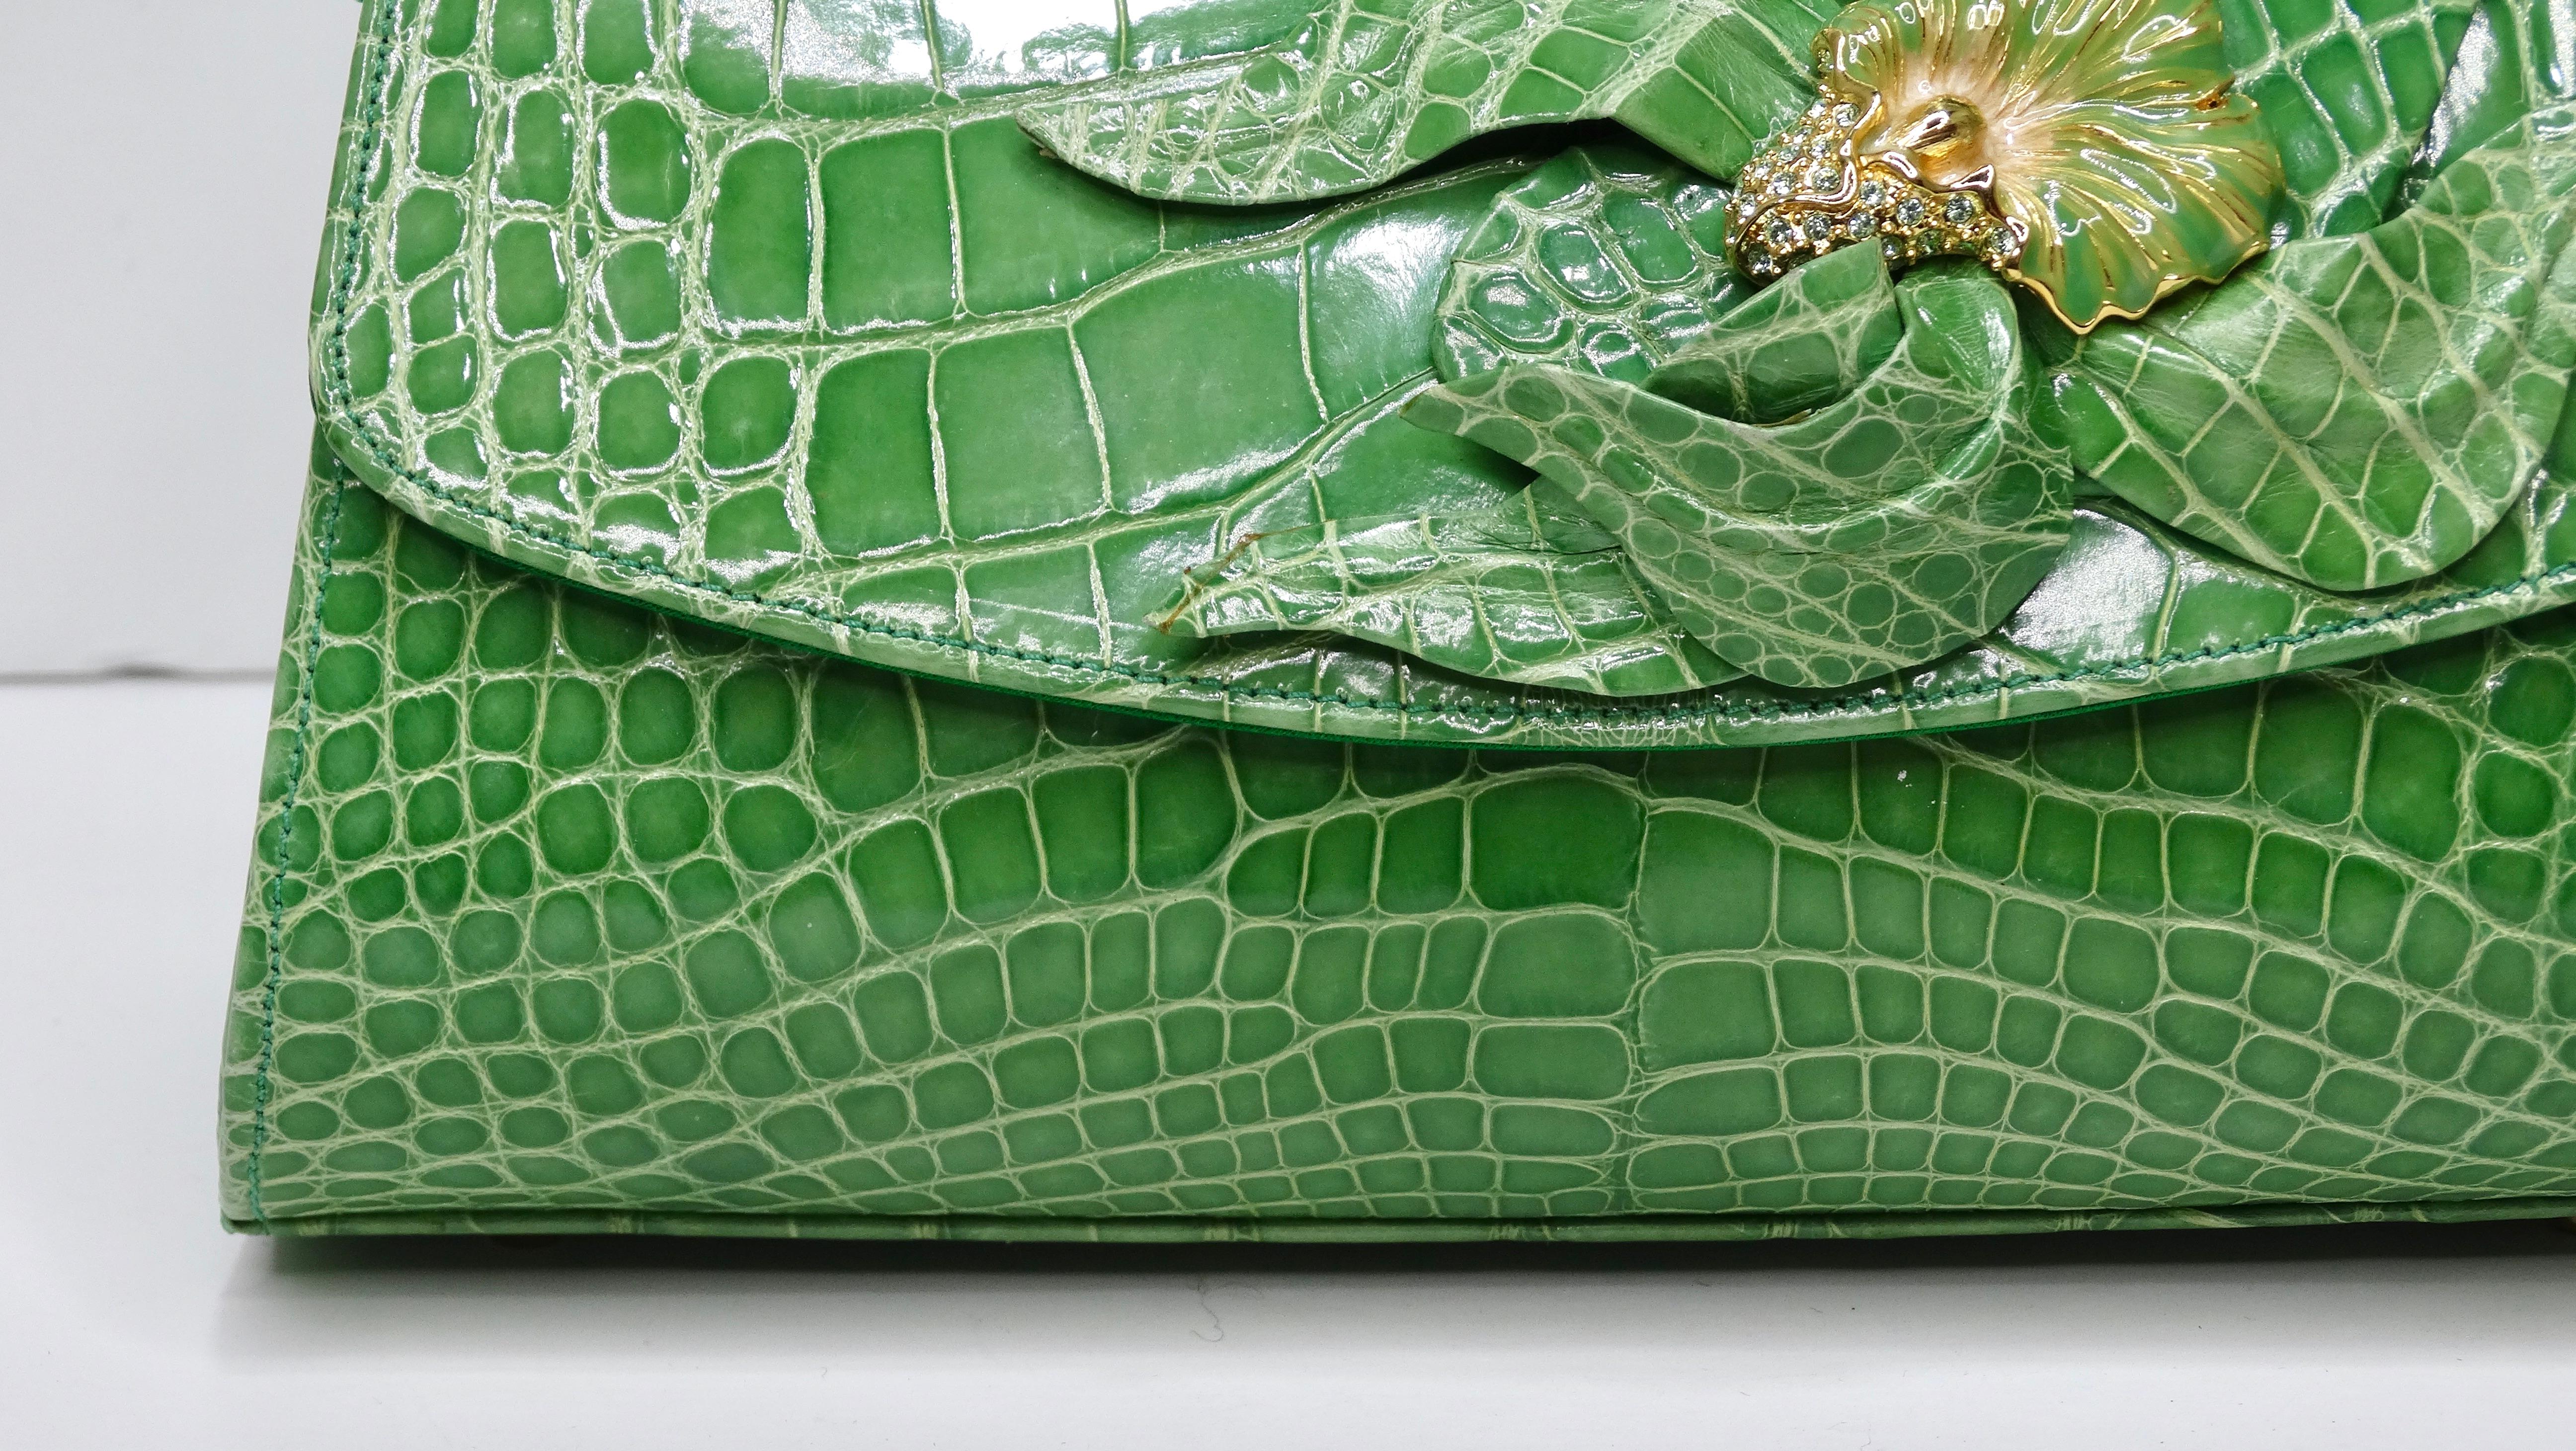 Vert Judith Leiber sac de soirée à poignée supérieure en alligator vert en vente